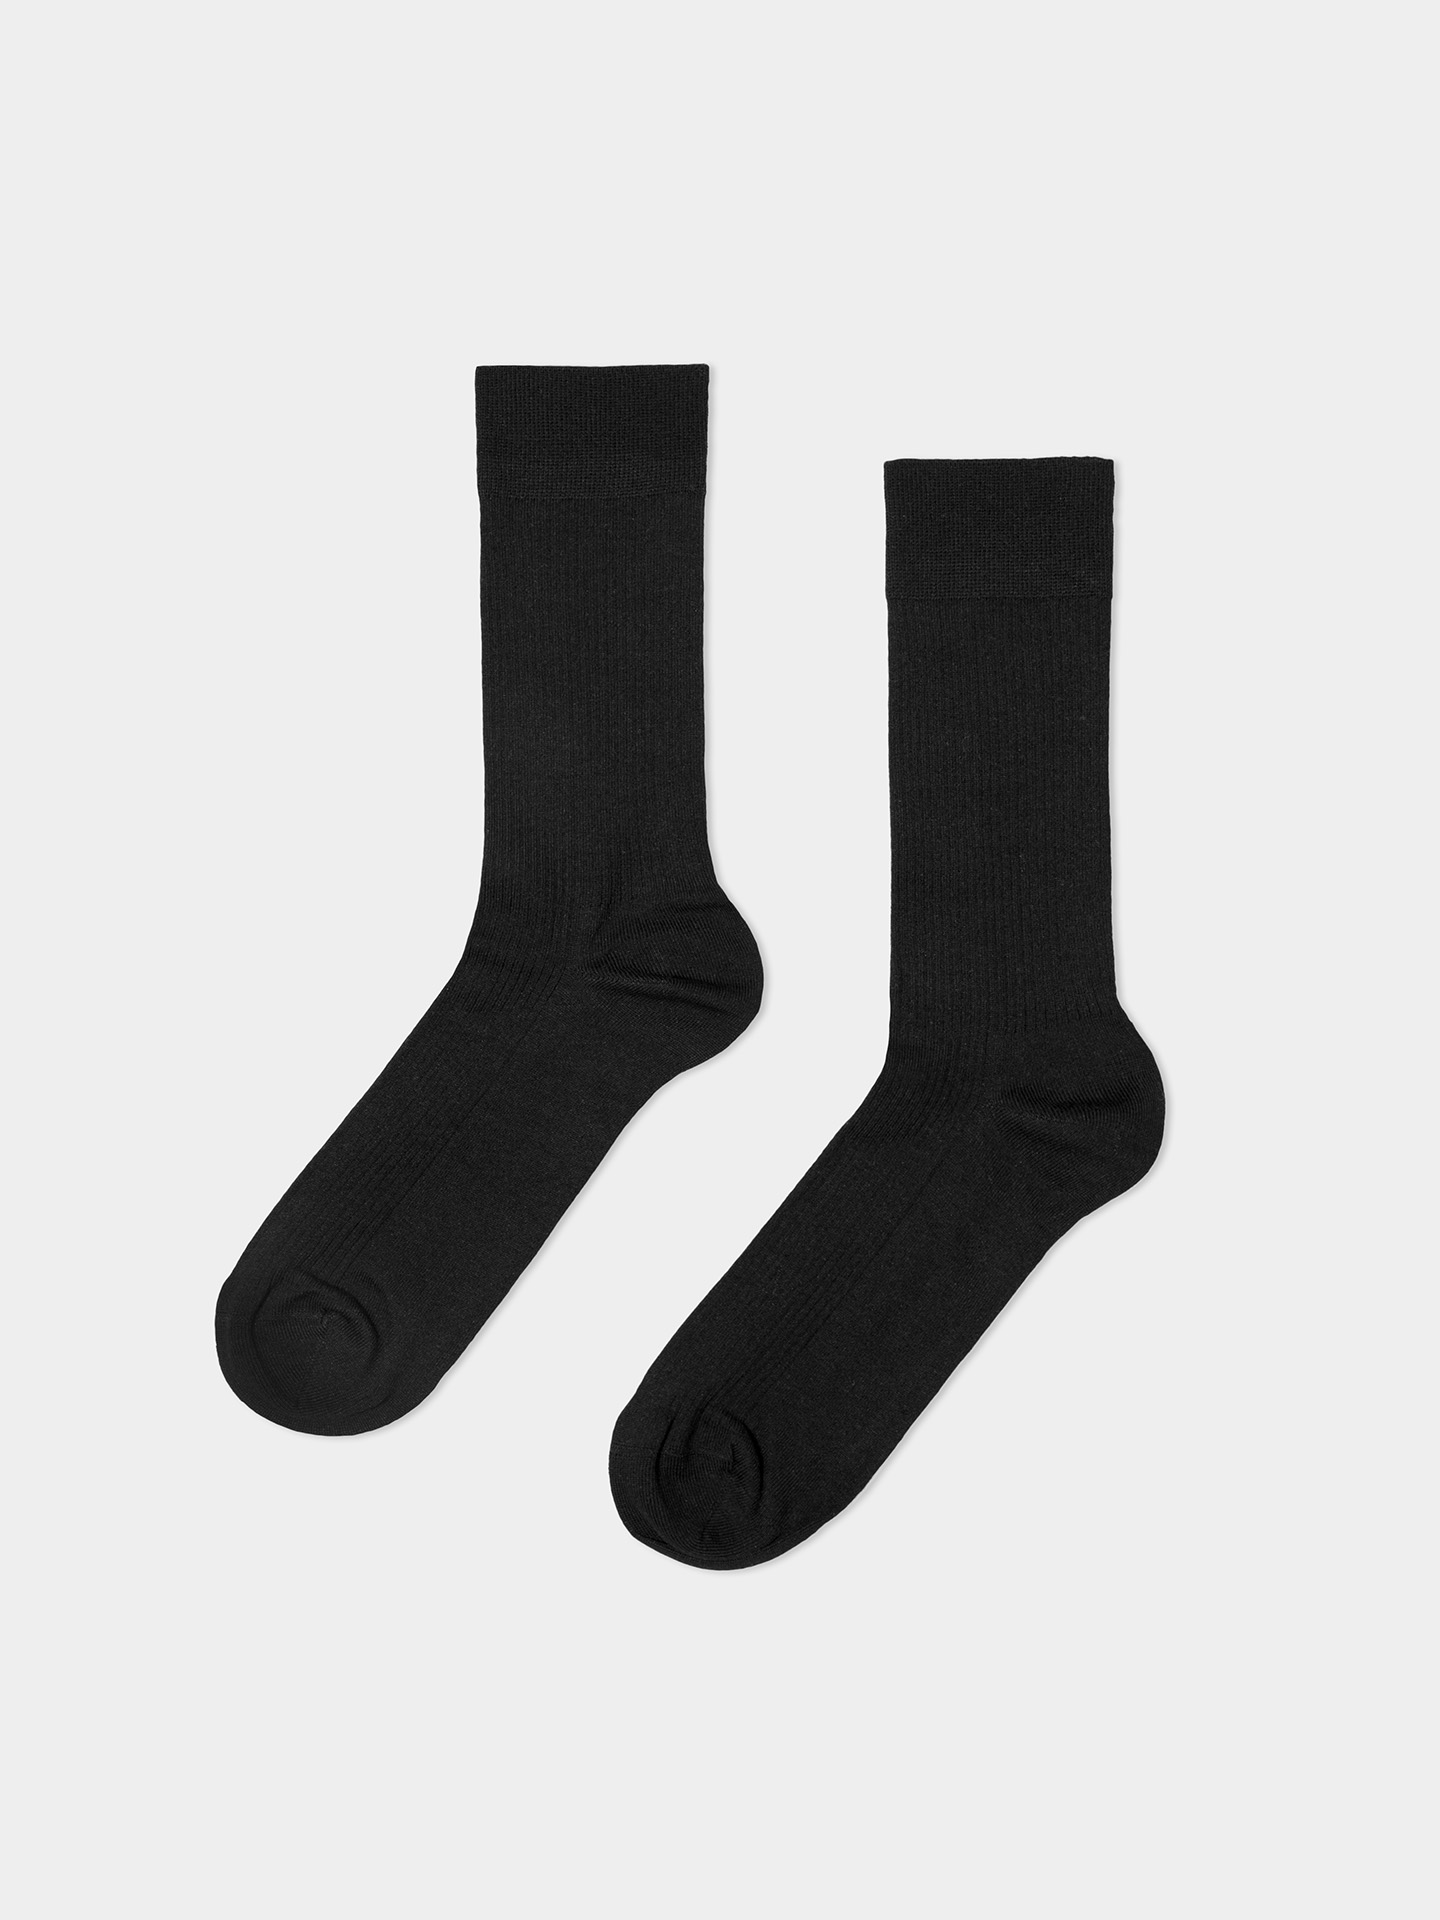 Носки Erlich Textil Socke 3 шт Casual Cotton Gerippte im 3 шт, черный